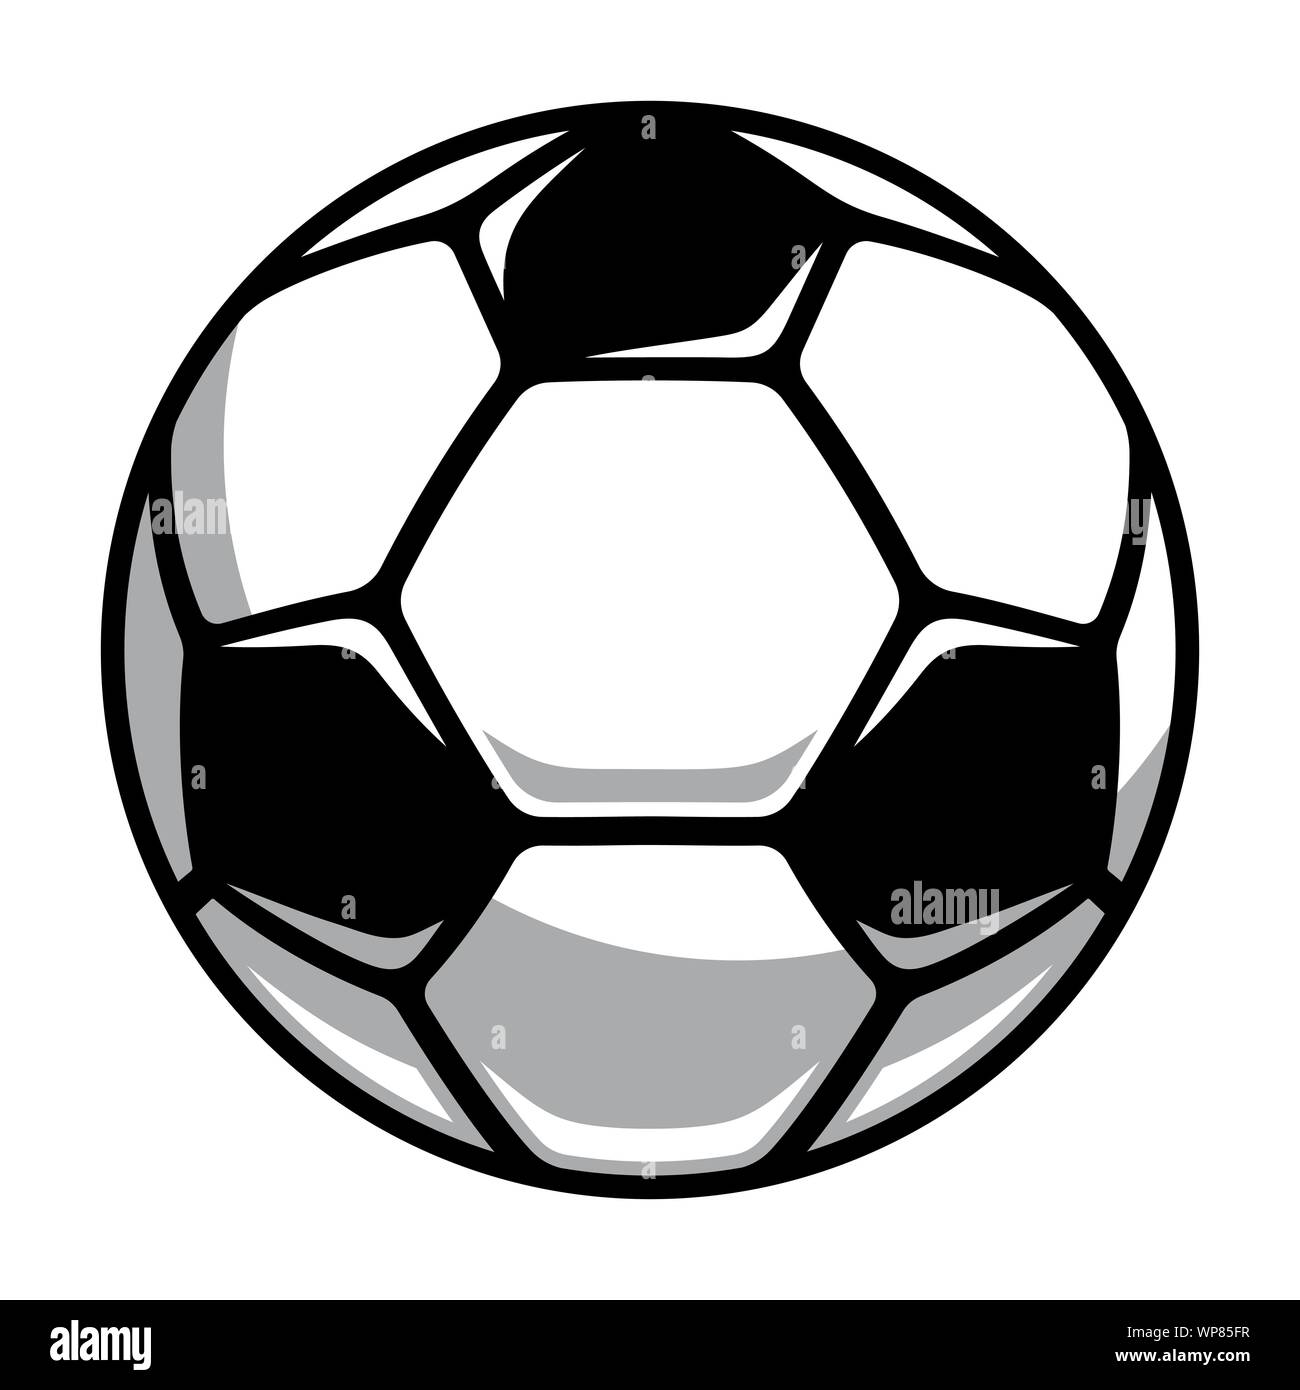 L'icône d'un ballon de football. Ballon de football européen. Vector illustration noir et blanc Illustration de Vecteur